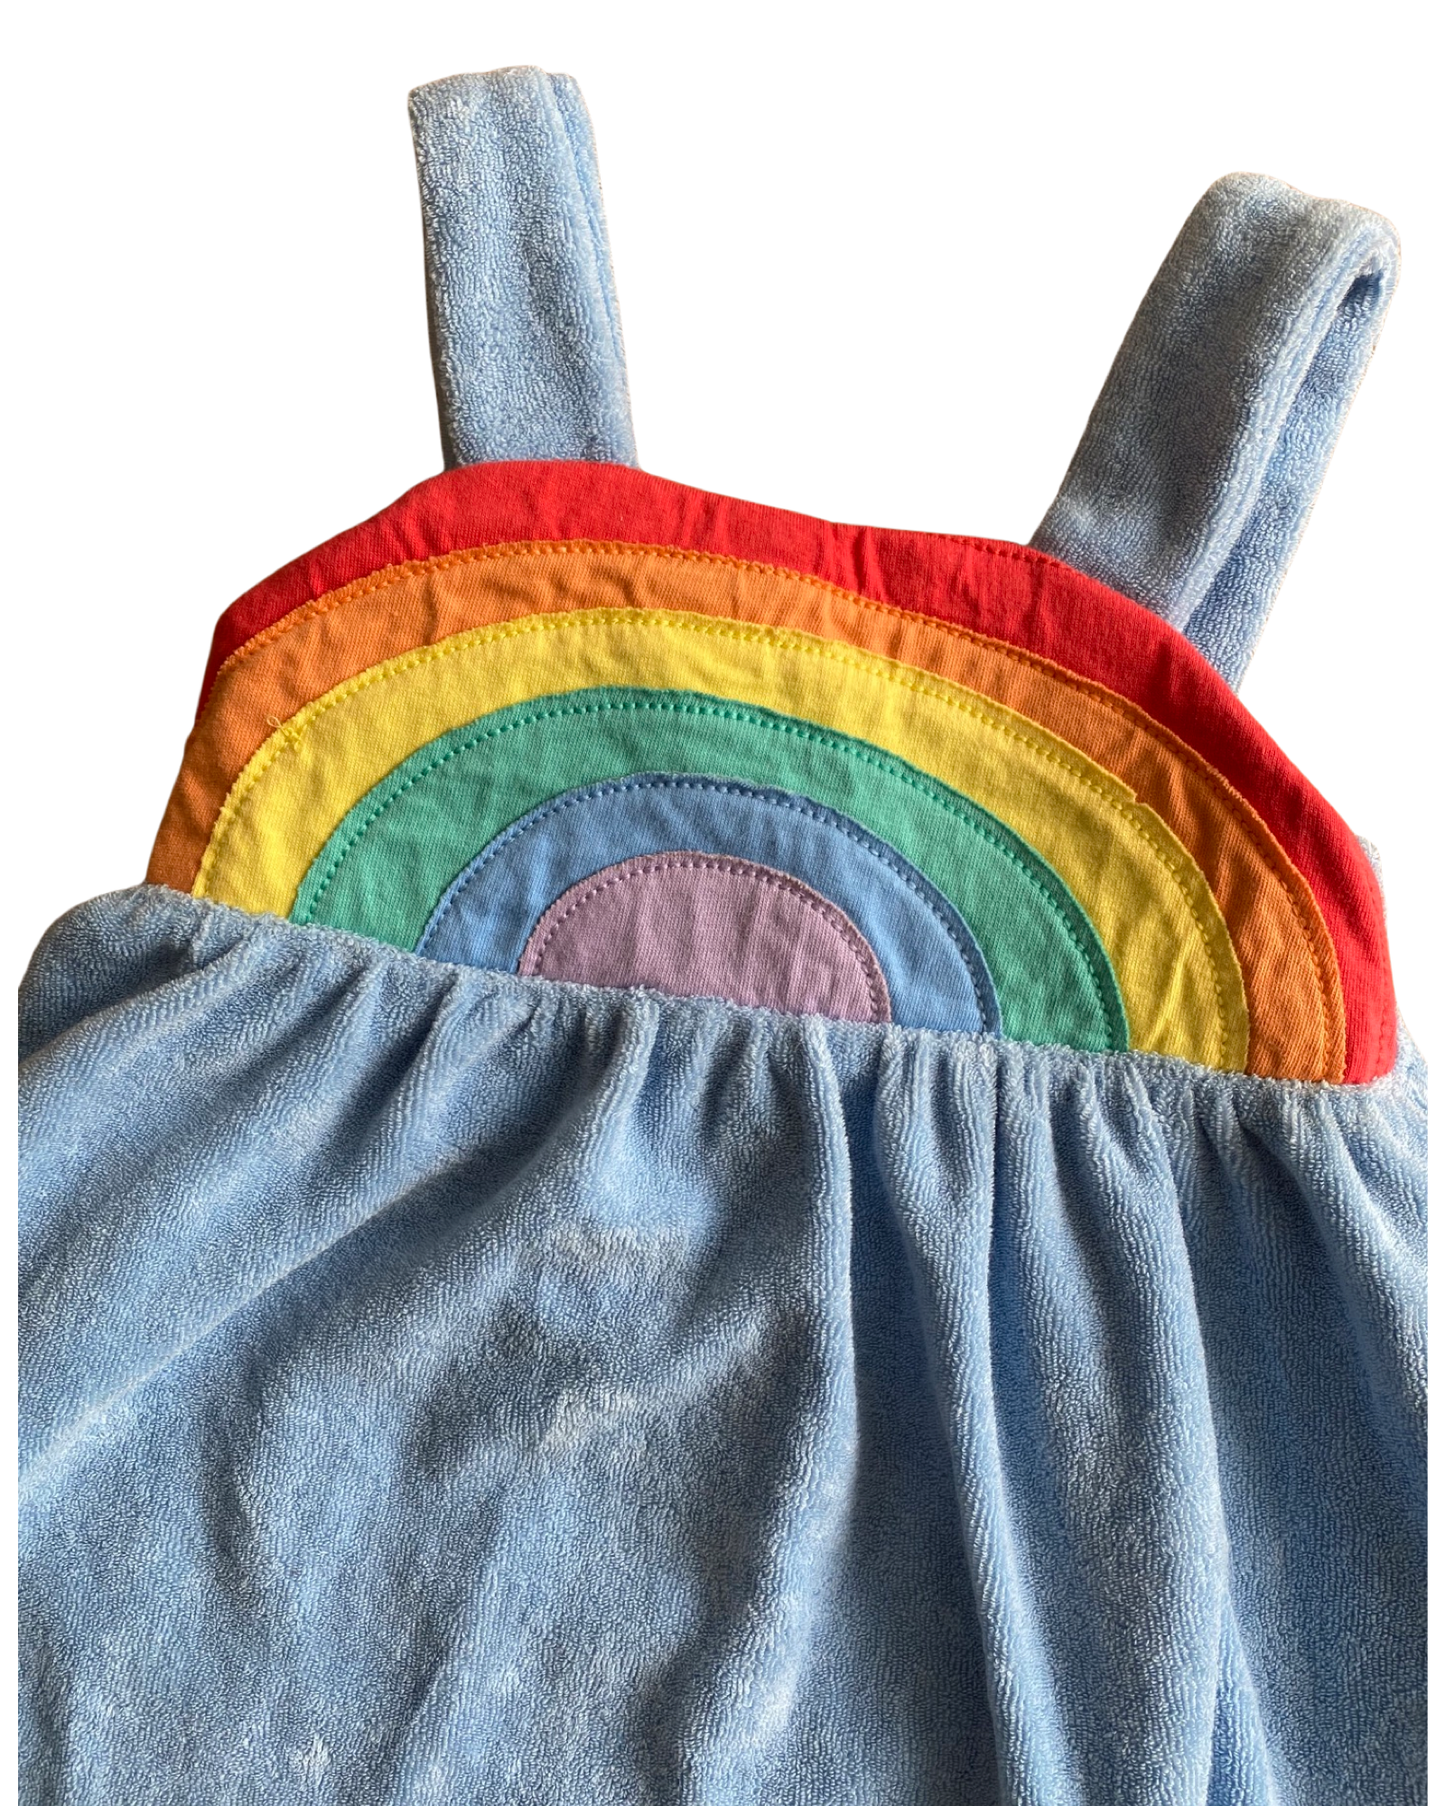 Little Bird by Jools terry towelling rainbow dress (12-18mths)